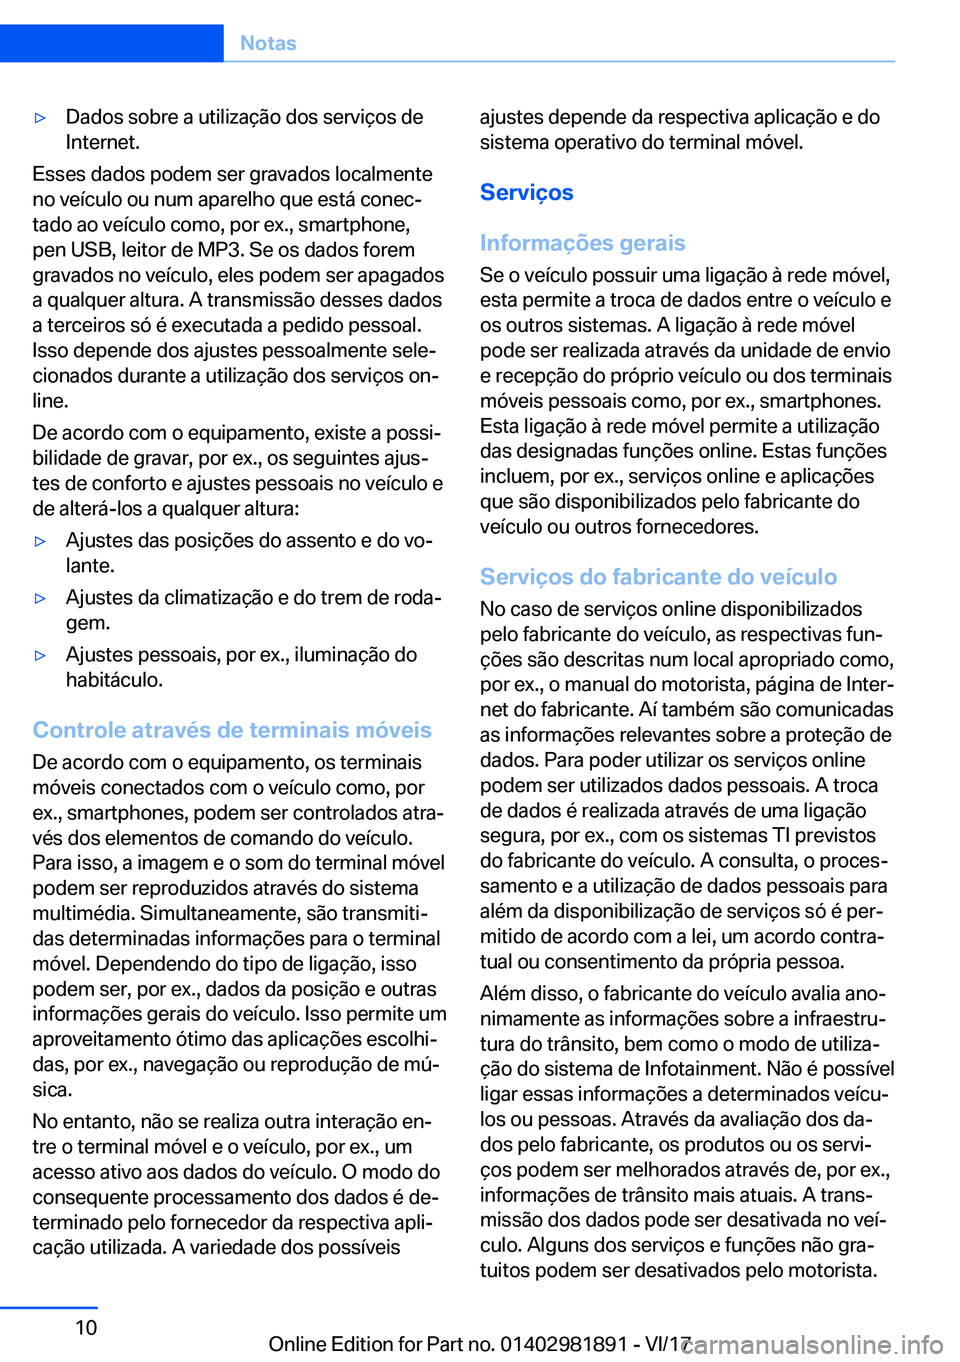 BMW 5 SERIES 2018  Manual do condutor (in Portuguese) 'y�D�a�d�o�s� �s�o�b�r�e� �a� �u�t�i�l�i�z�a�ç�ã�o� �d�o�s� �s�e�r�v�i�ç�o�s� �d�e
�I�n�t�e�r�n�e�t�.
�E�s�s�e�s� �d�a�d�o�s� �p�o�d�e�m� �s�e�r� �g�r�a�v�a�d�o�s� �l�o�c�a�l�m�e�n�t�e
�n�o� �v